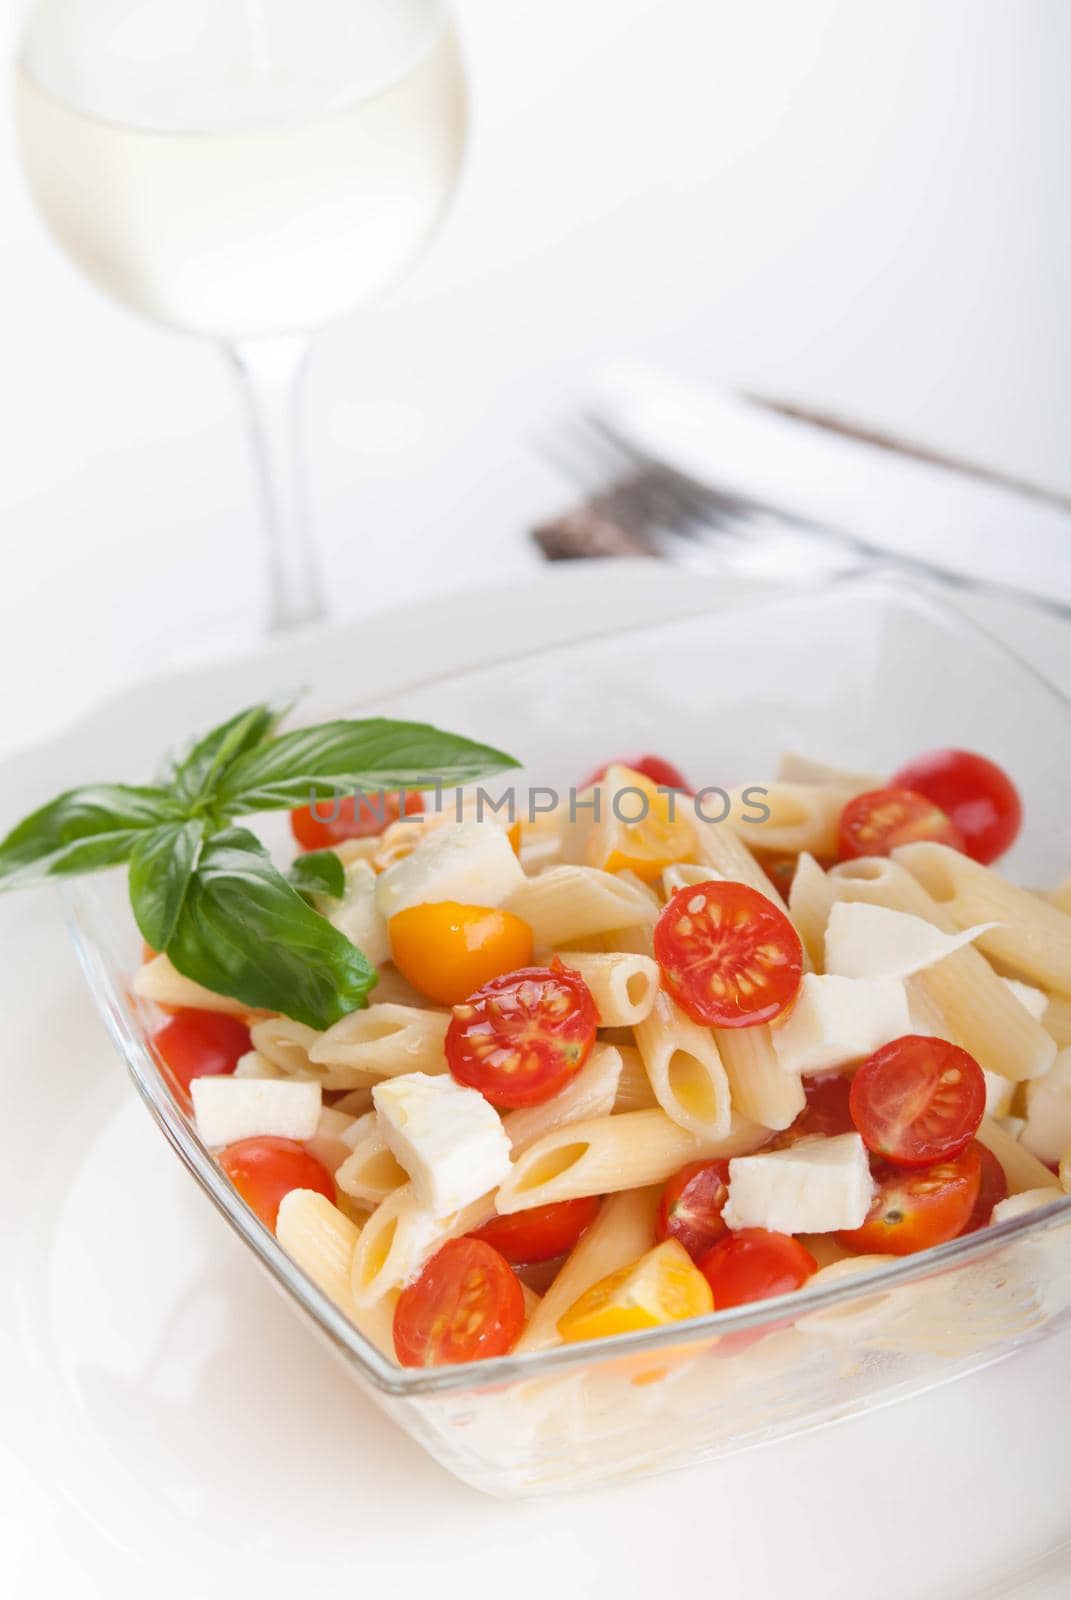 delicious pasta salad with fresh mozarella and cherry tomatoes, basil by maramorosz